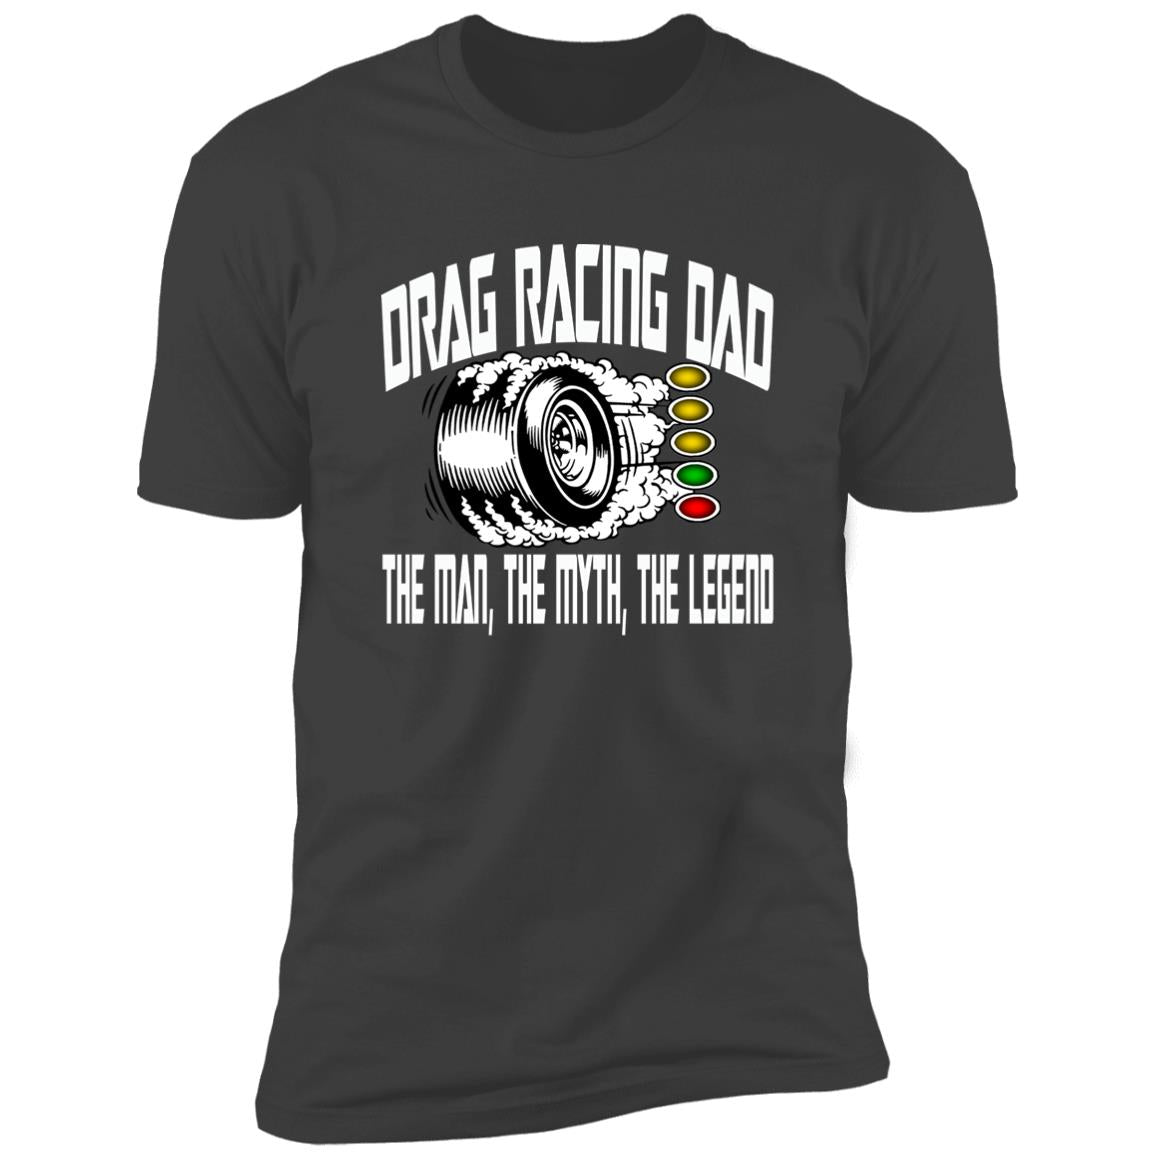 Drag Racing Dad Premium Short Sleeve Tee (Closeout)